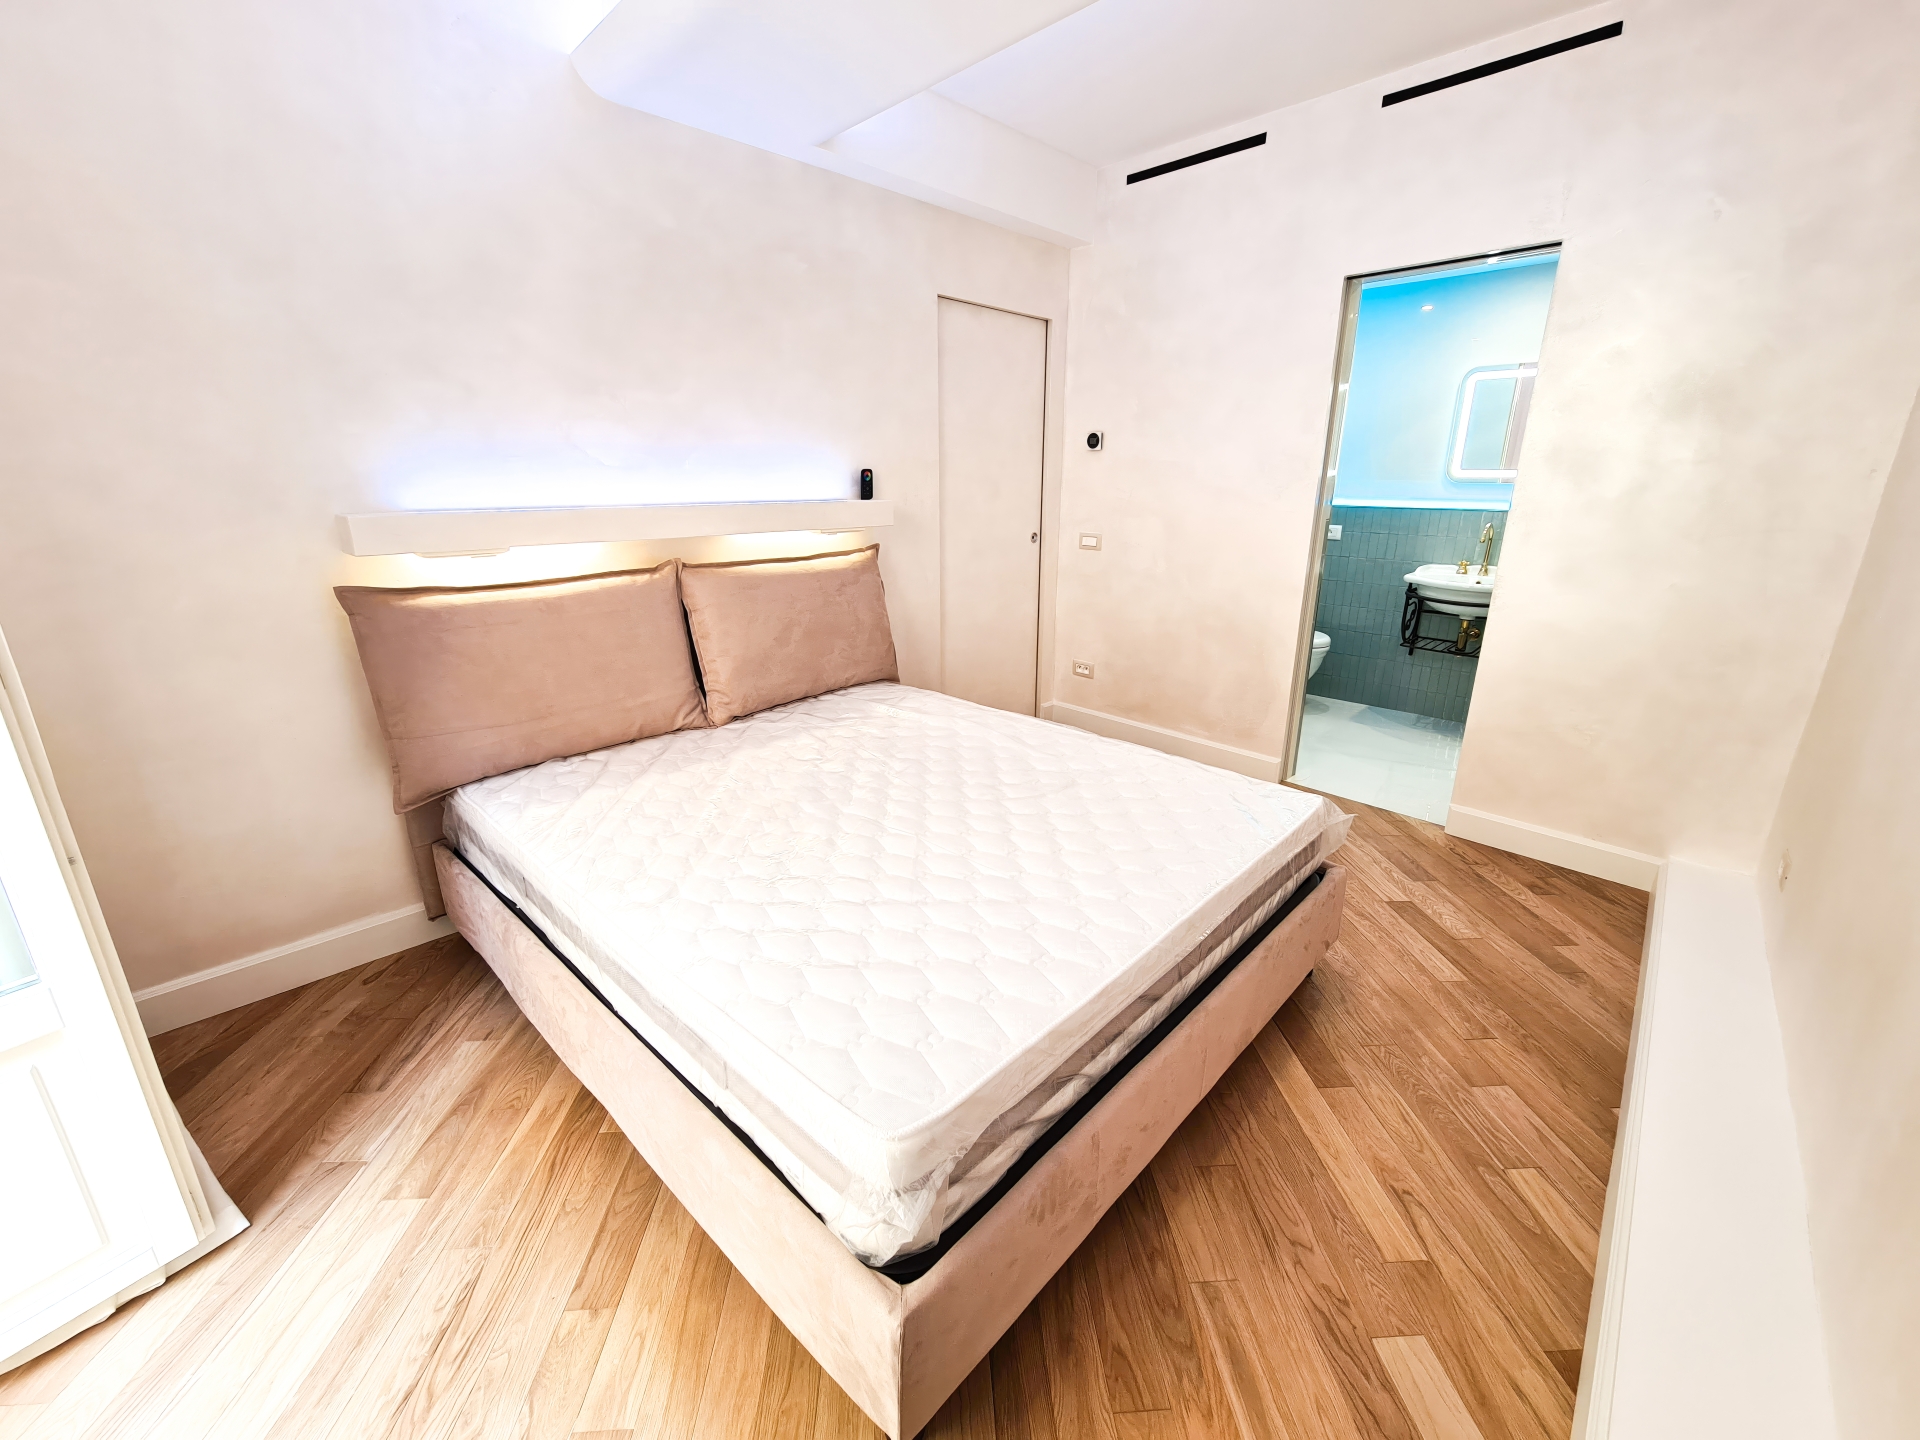 Dotta Appartement de 4 pieces a vendre - 32 rue Felix Gastaldi - Monaco-Ville - Monaco - img2